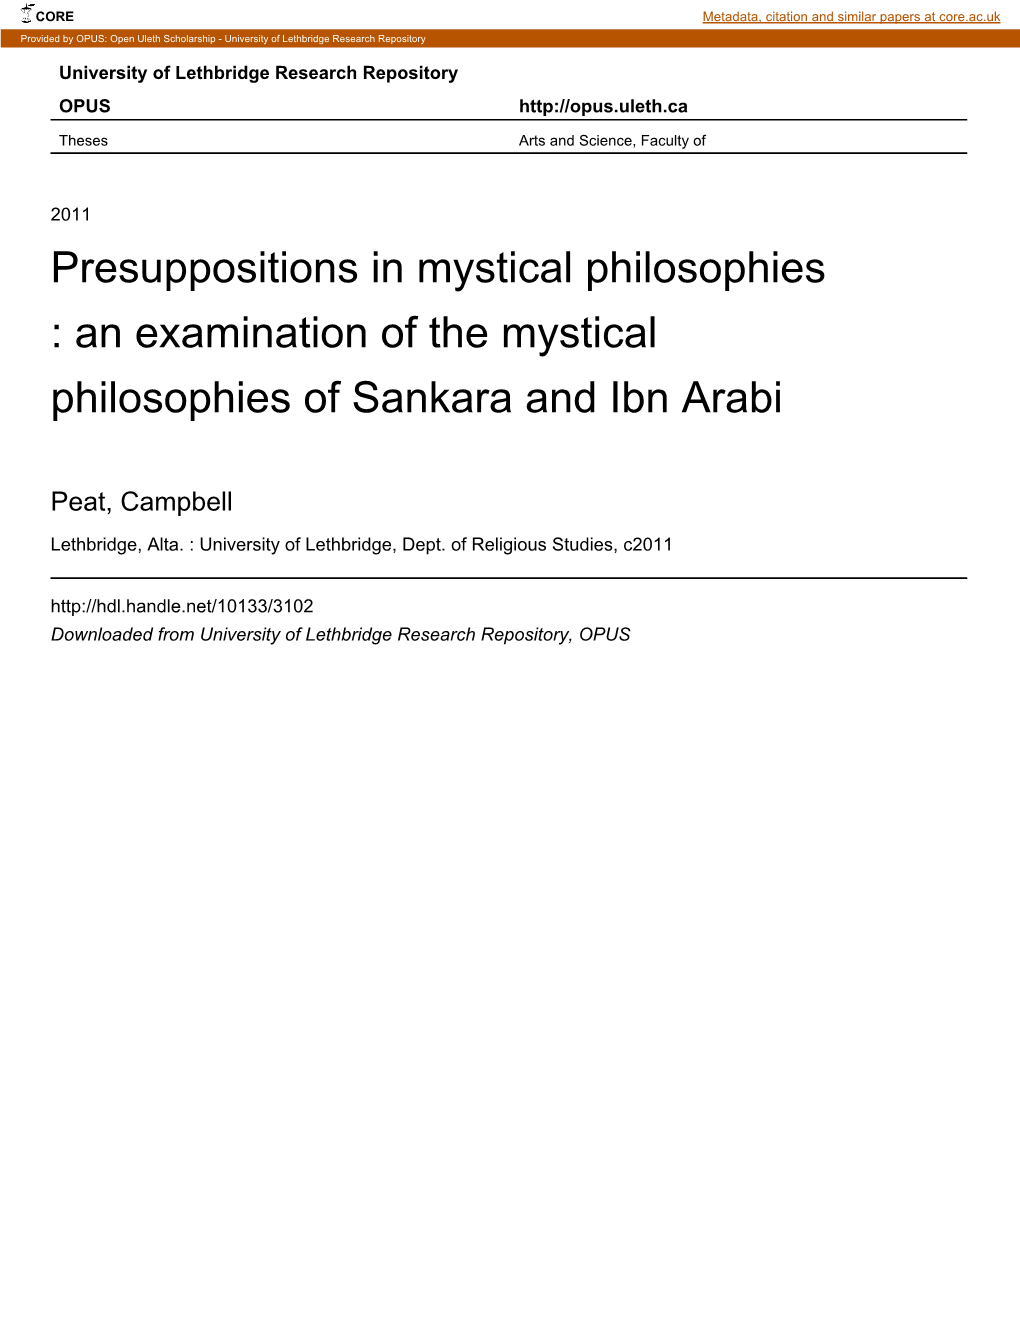 An Examination of the Mystical Philosophies of Sankara and Ibn Arabi